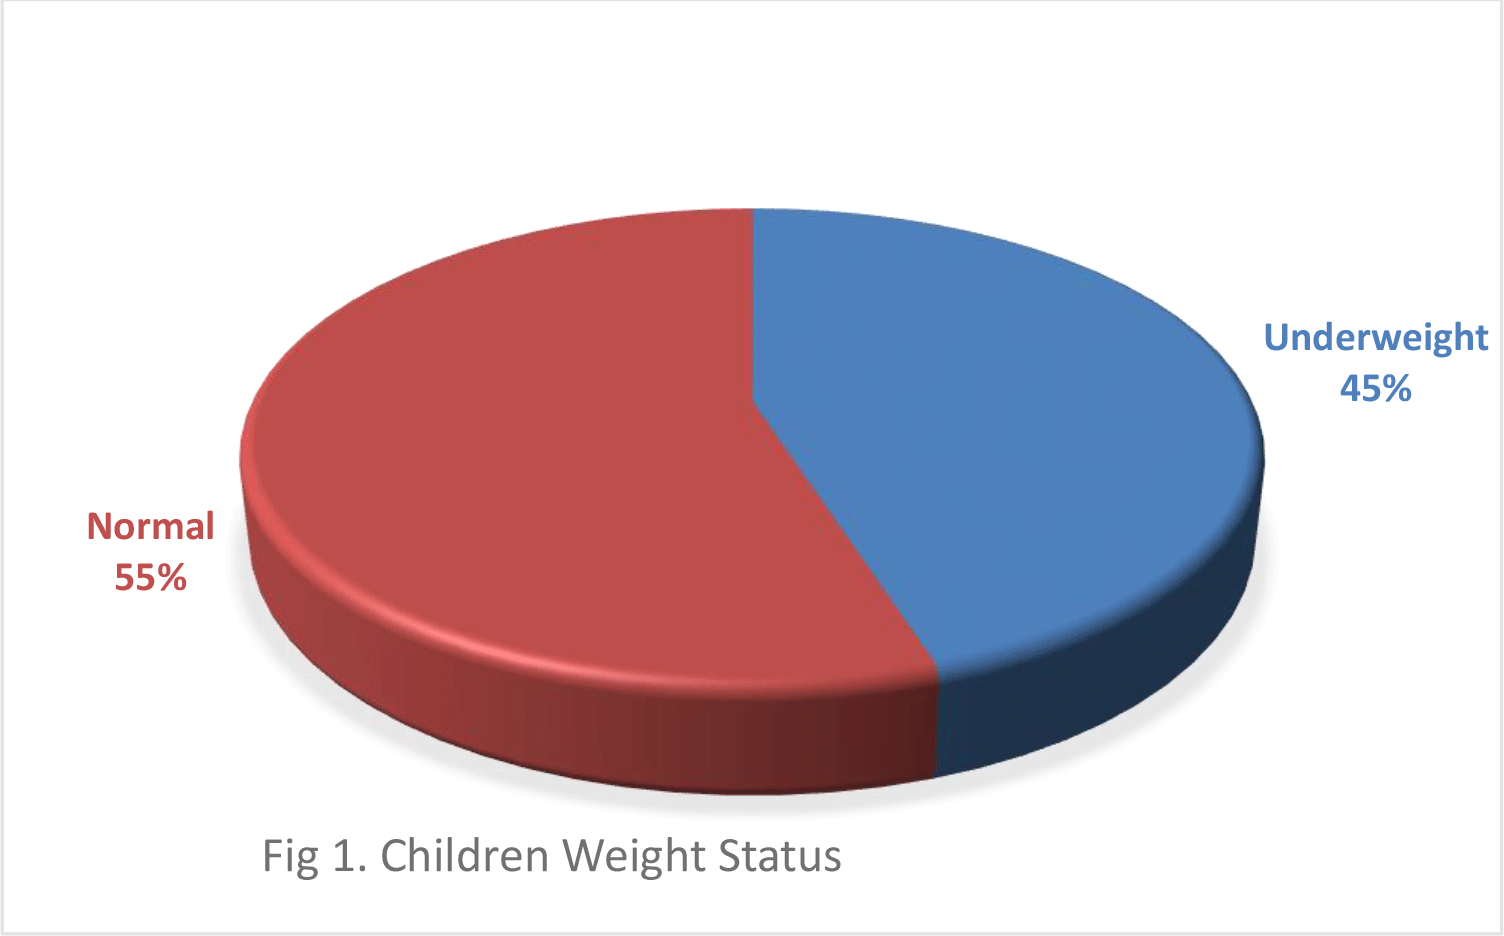 Associated Factors of Underweight Status of Children in Wolkite Health Care Center